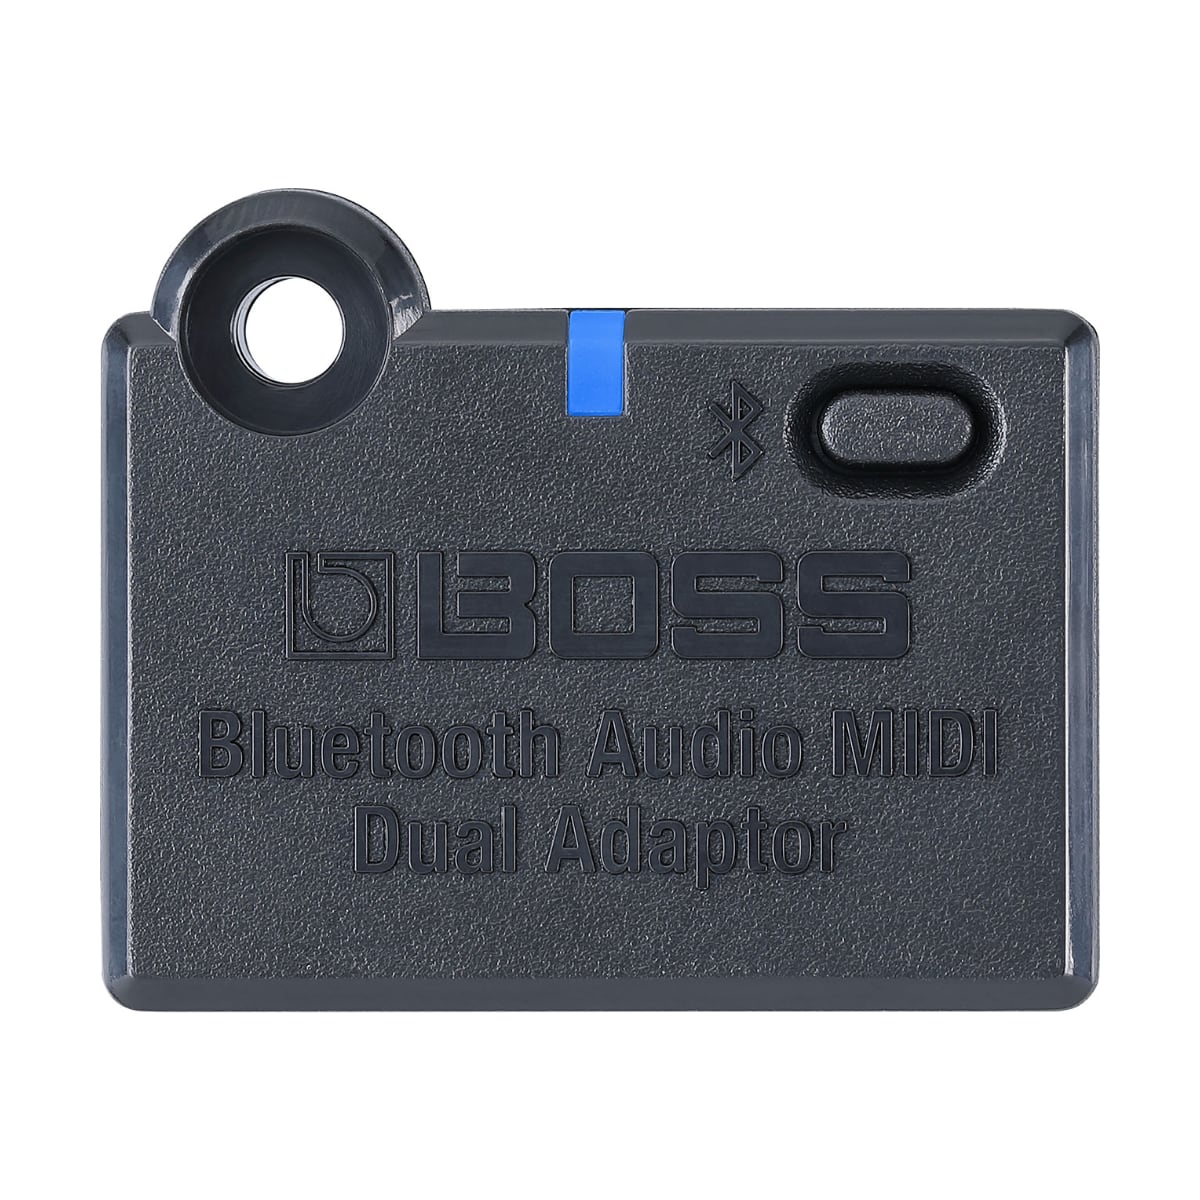 Boss BLUETOOTH® AUDIO MIDI DUAL ADAPTOR